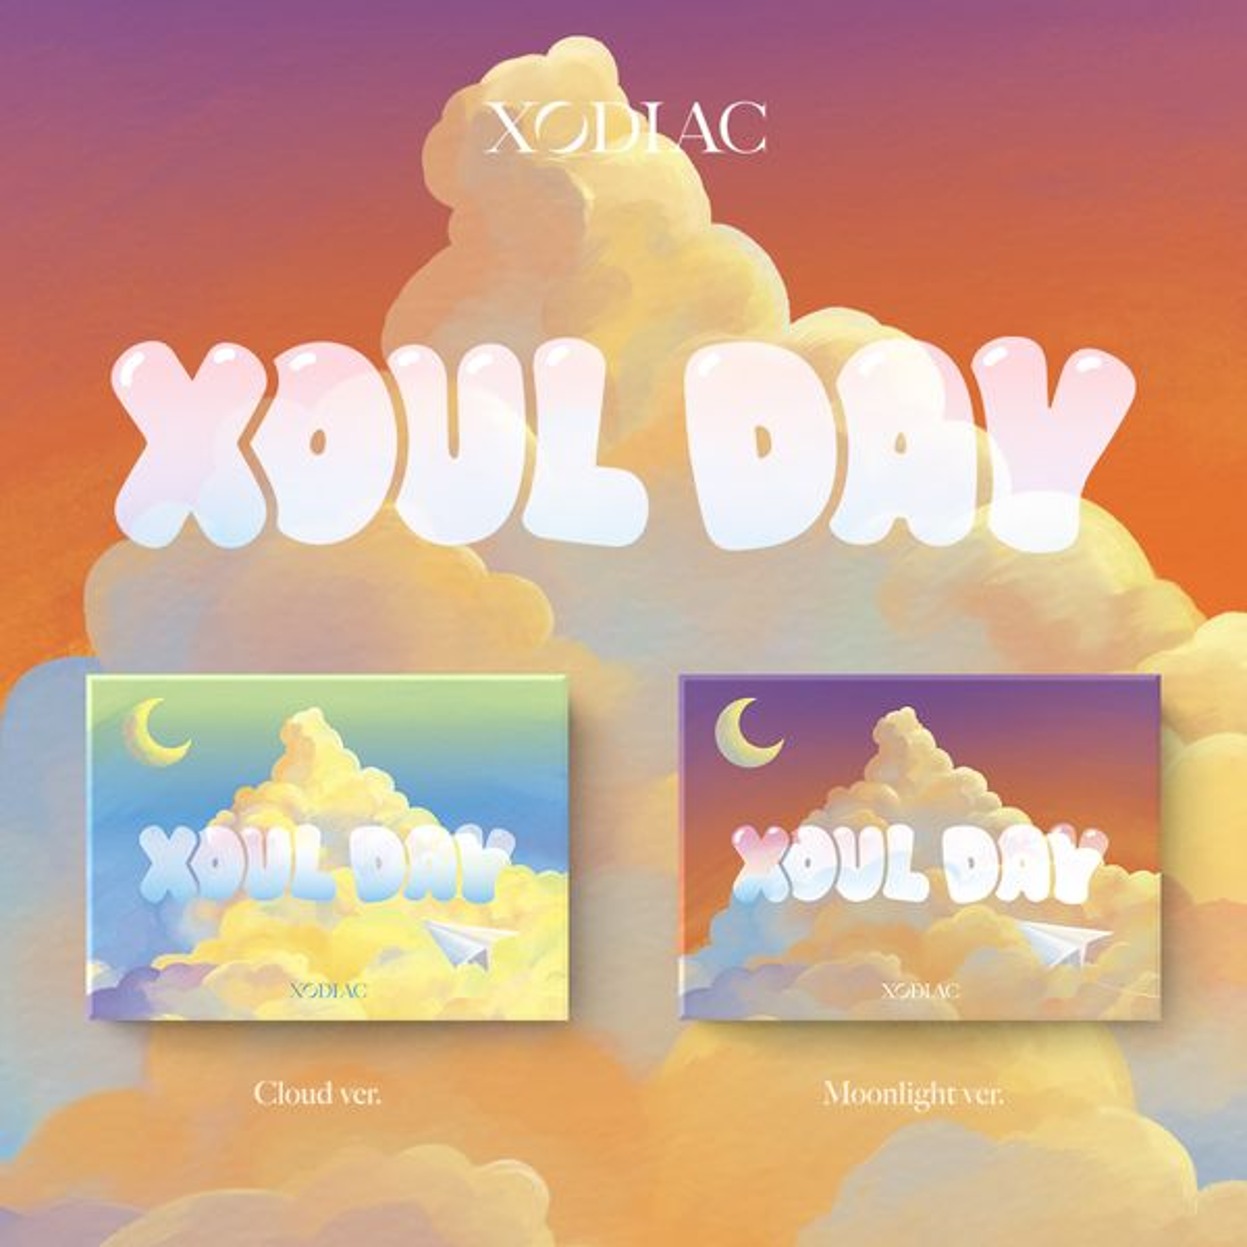 [XODIAC] - 单曲专辑 2辑 [XOUL DAY] (POCAALBUM) (随机版本)